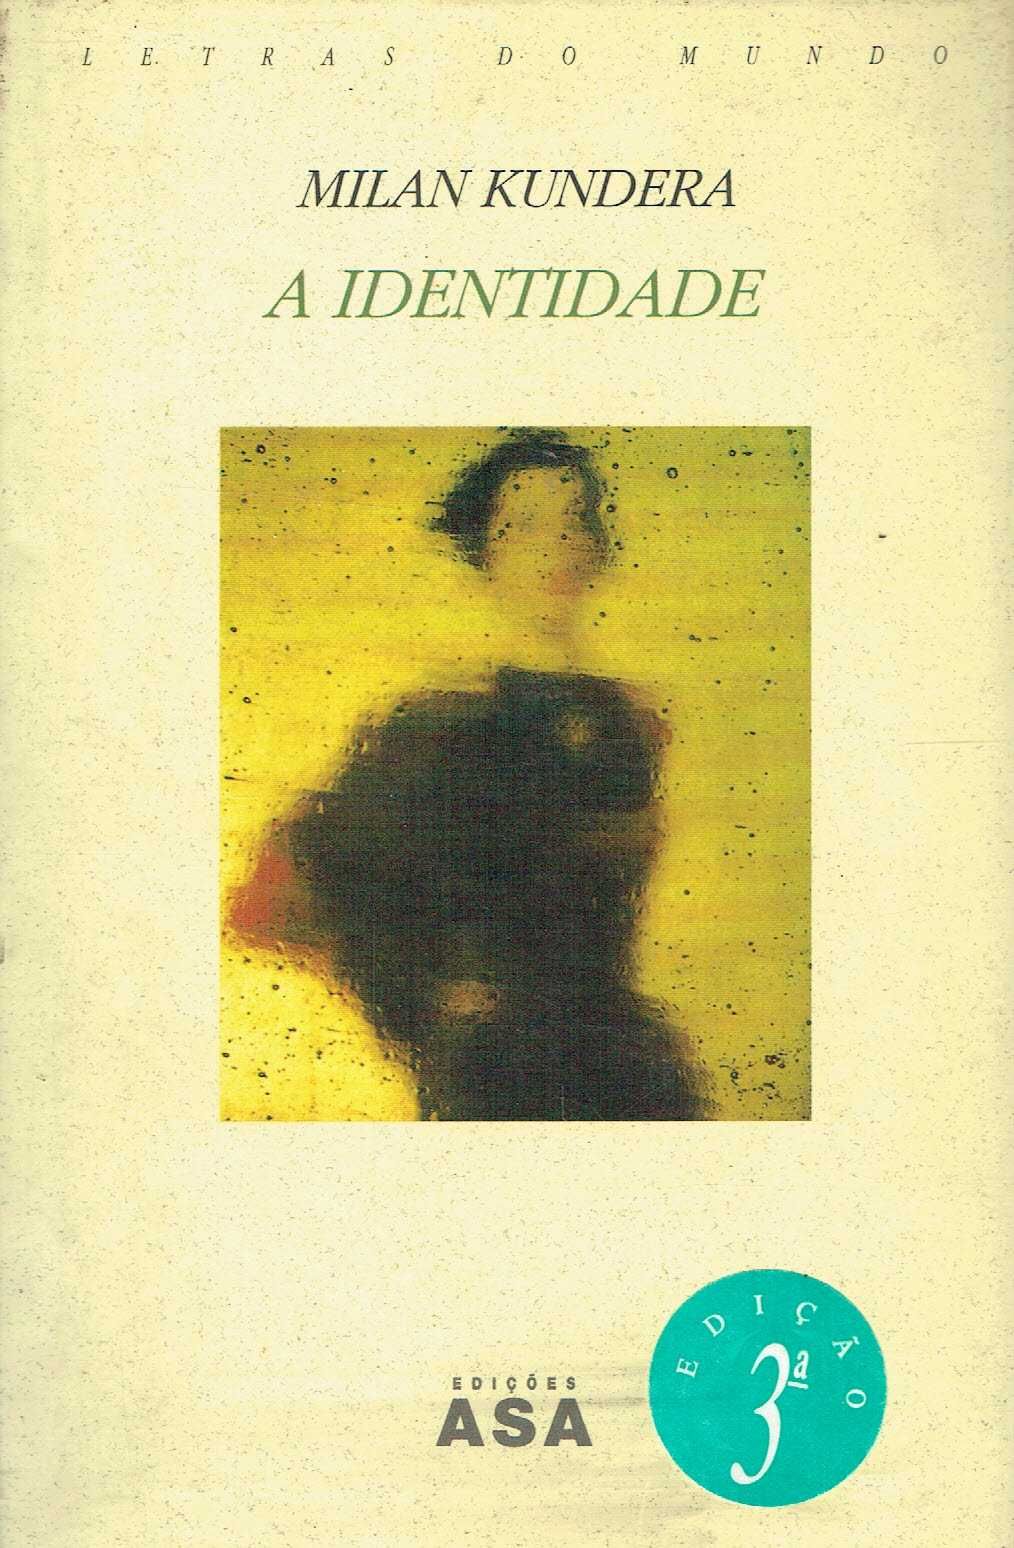 15374

Livros de Milan Kundera